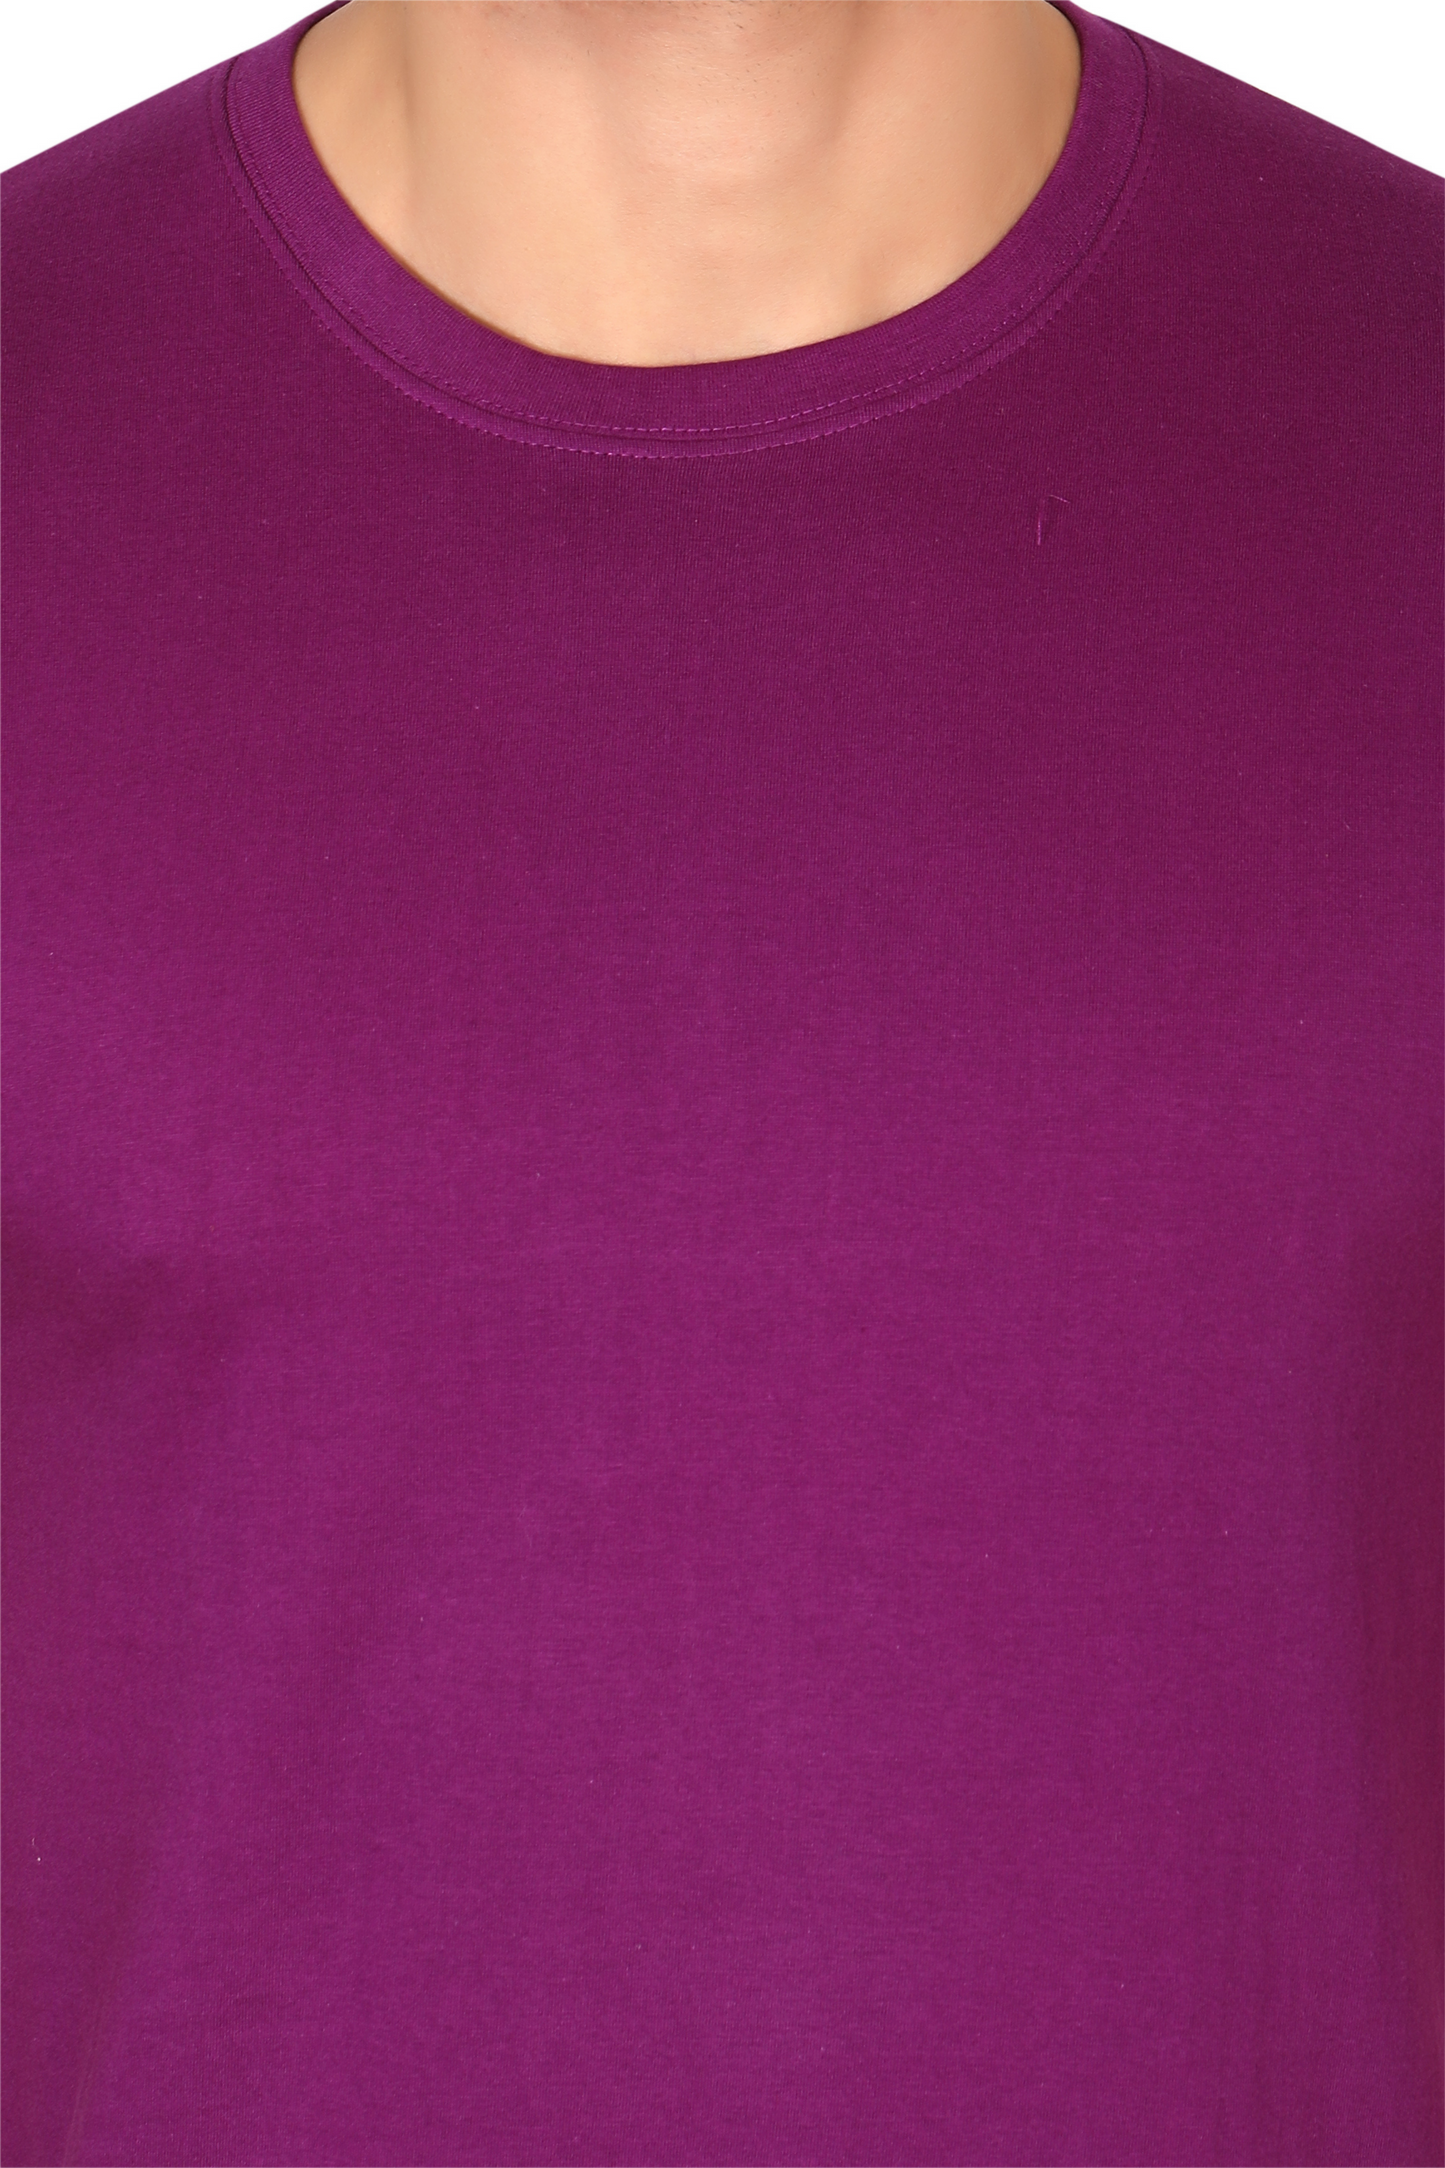 100% Cotton Men’s Half Sleeve T-Shirt - Purple